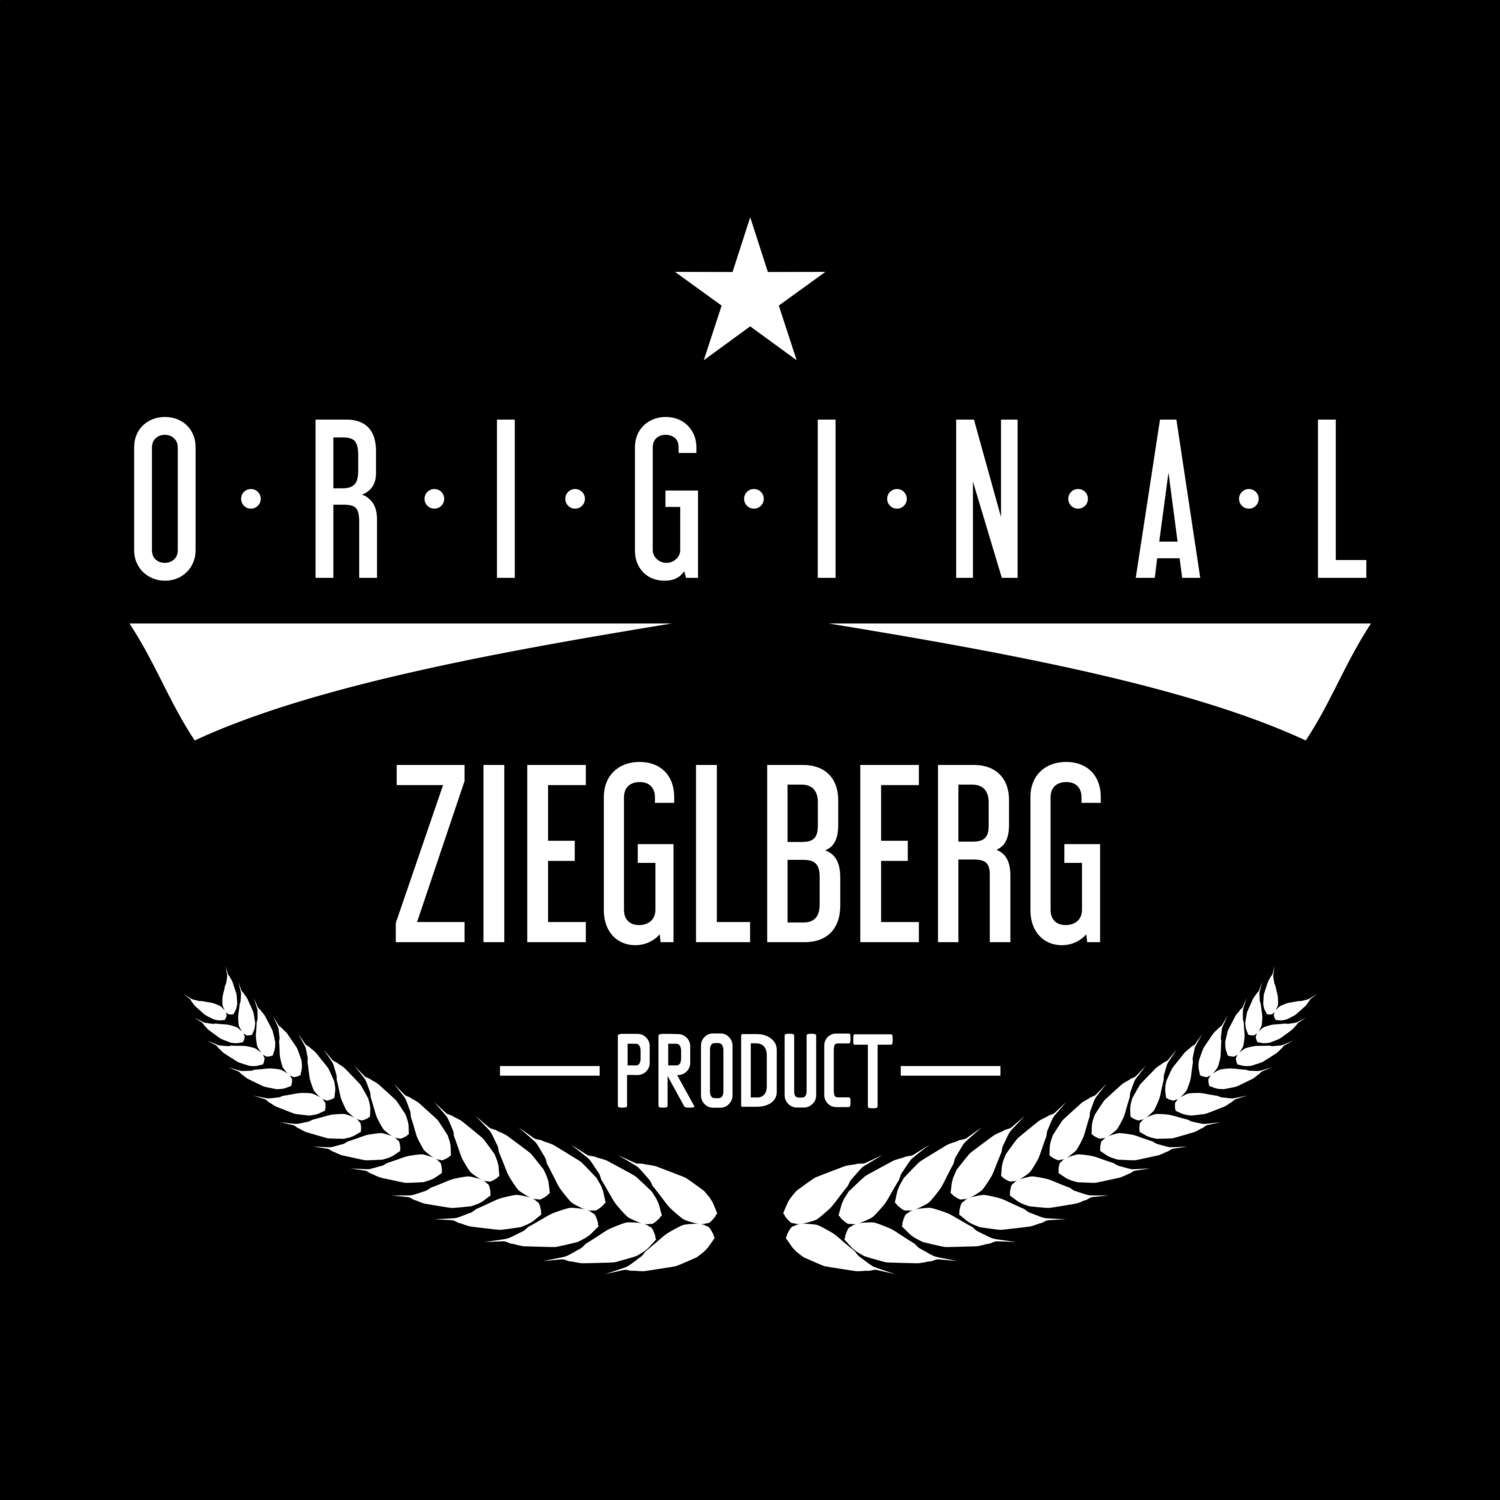 Zieglberg T-Shirt »Original Product«